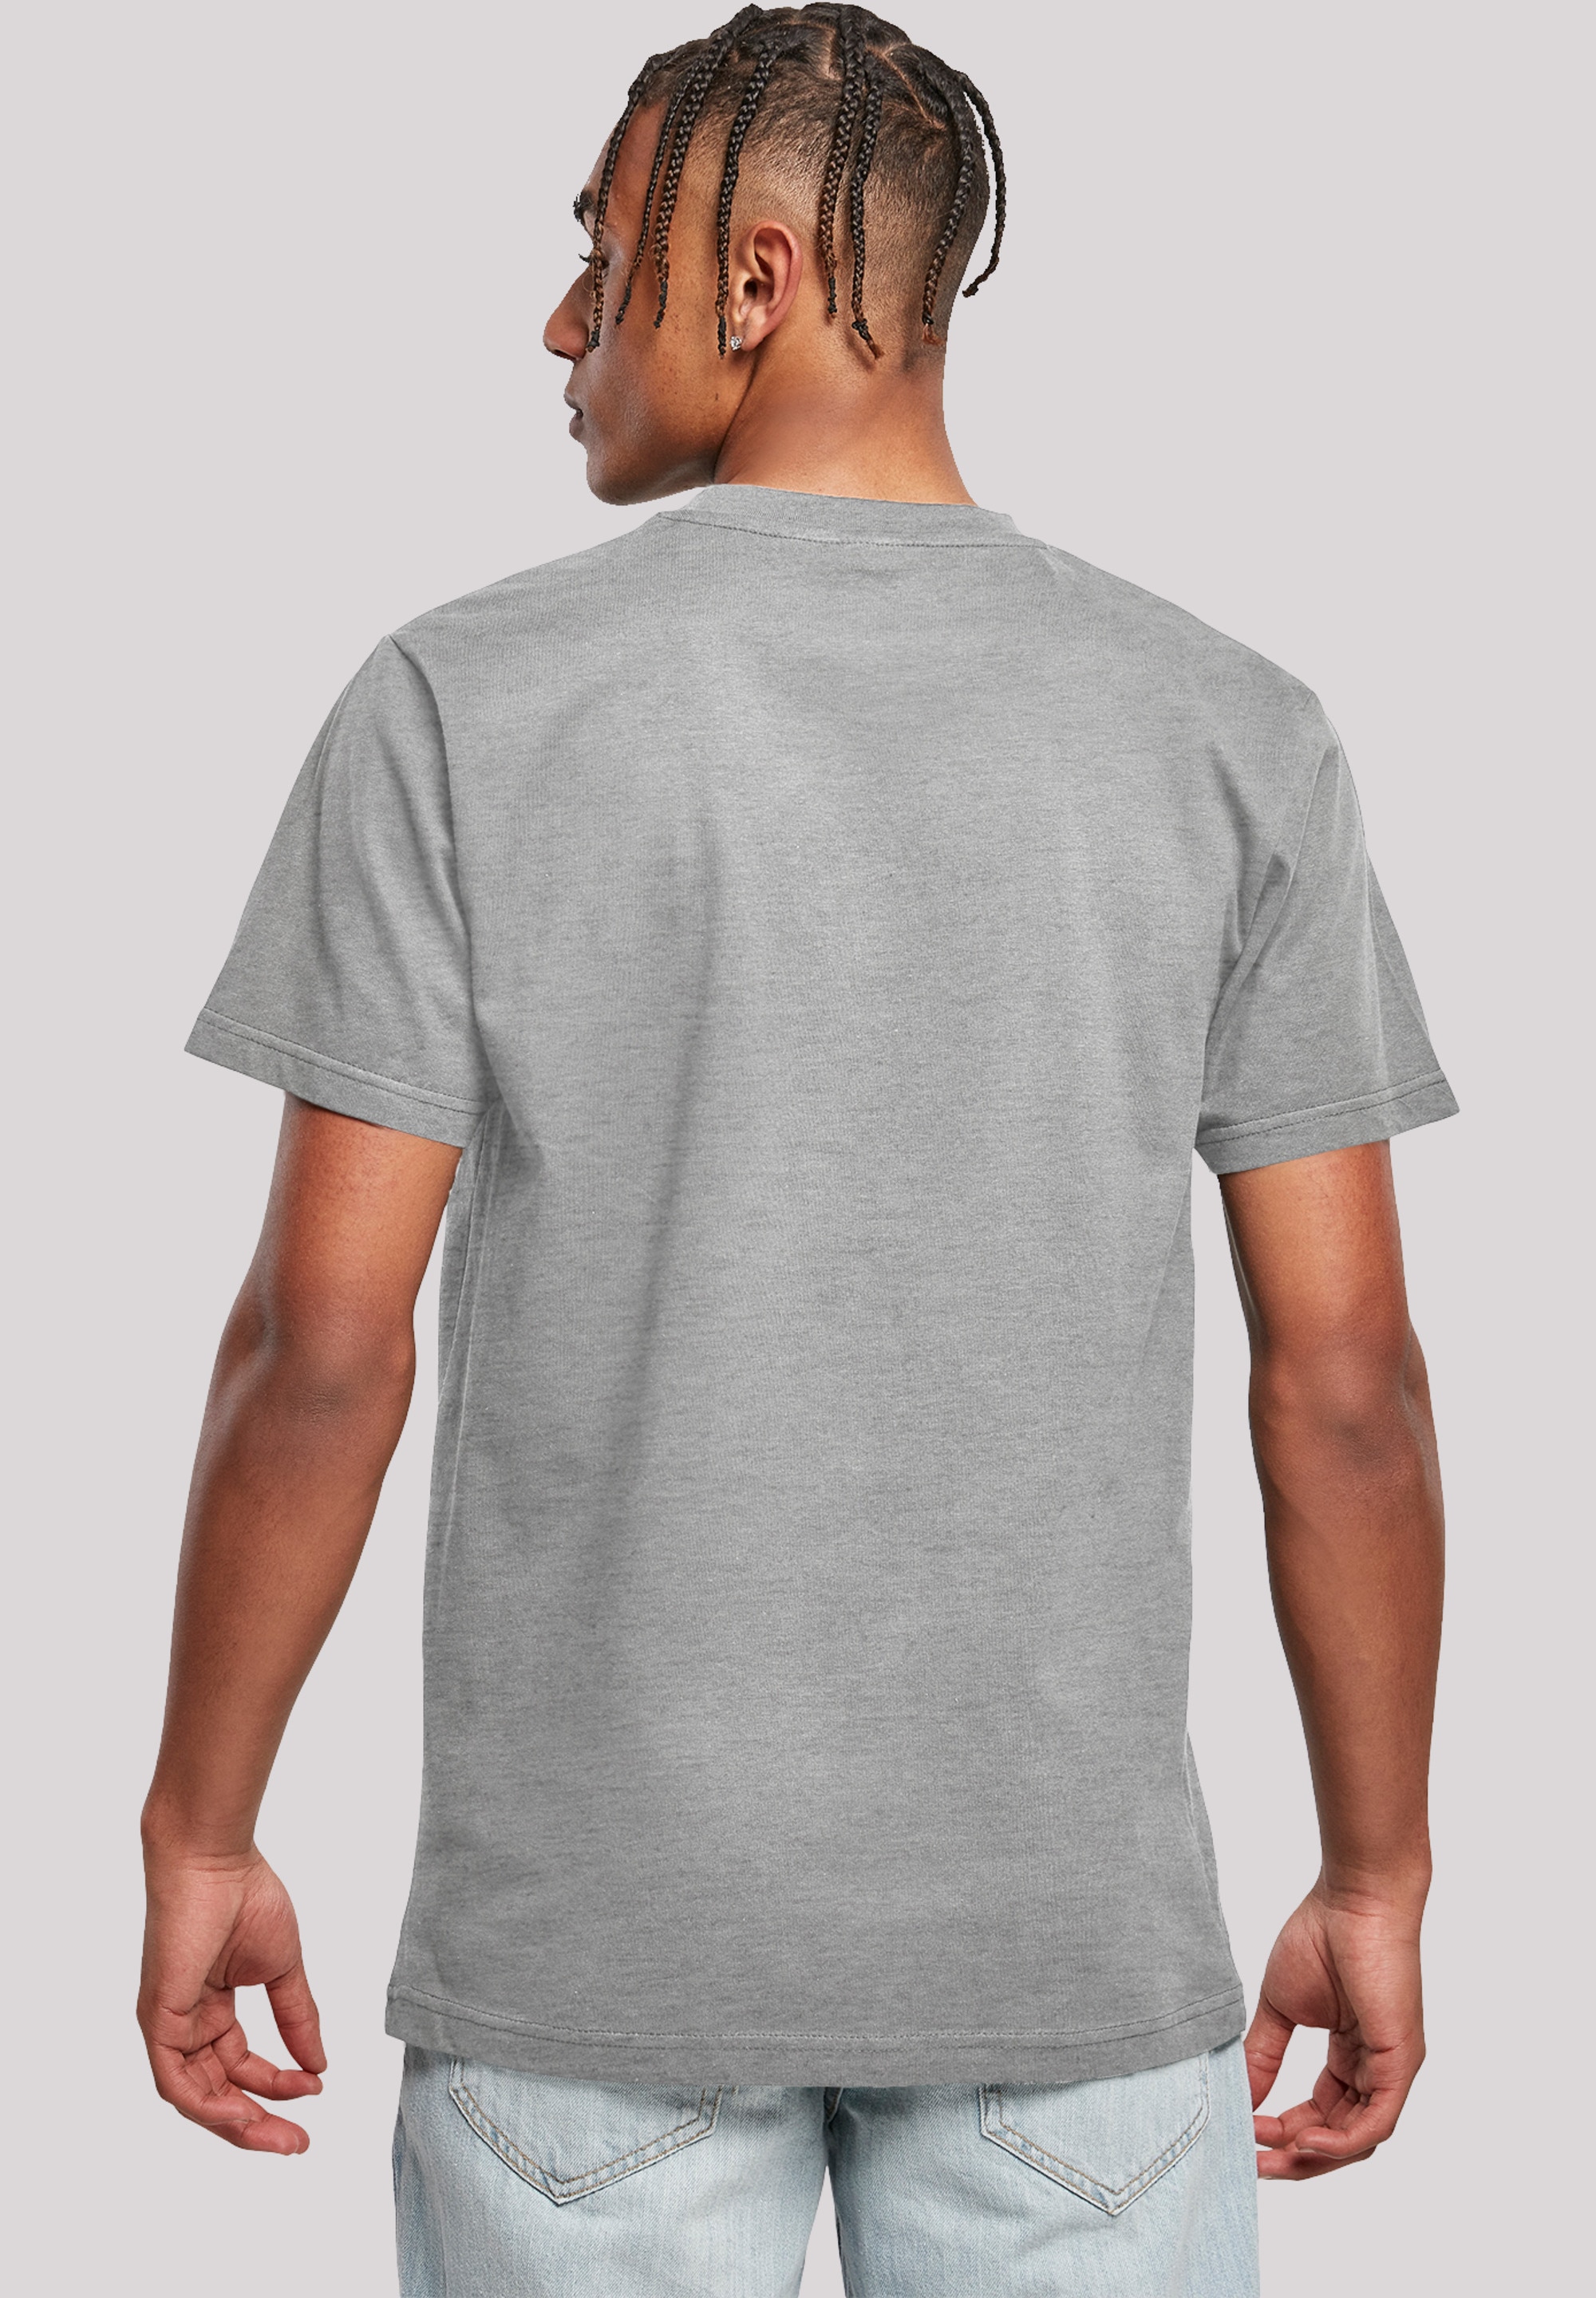 F4NT4STIC T-Shirt »NASA Logo One Tone«, Print